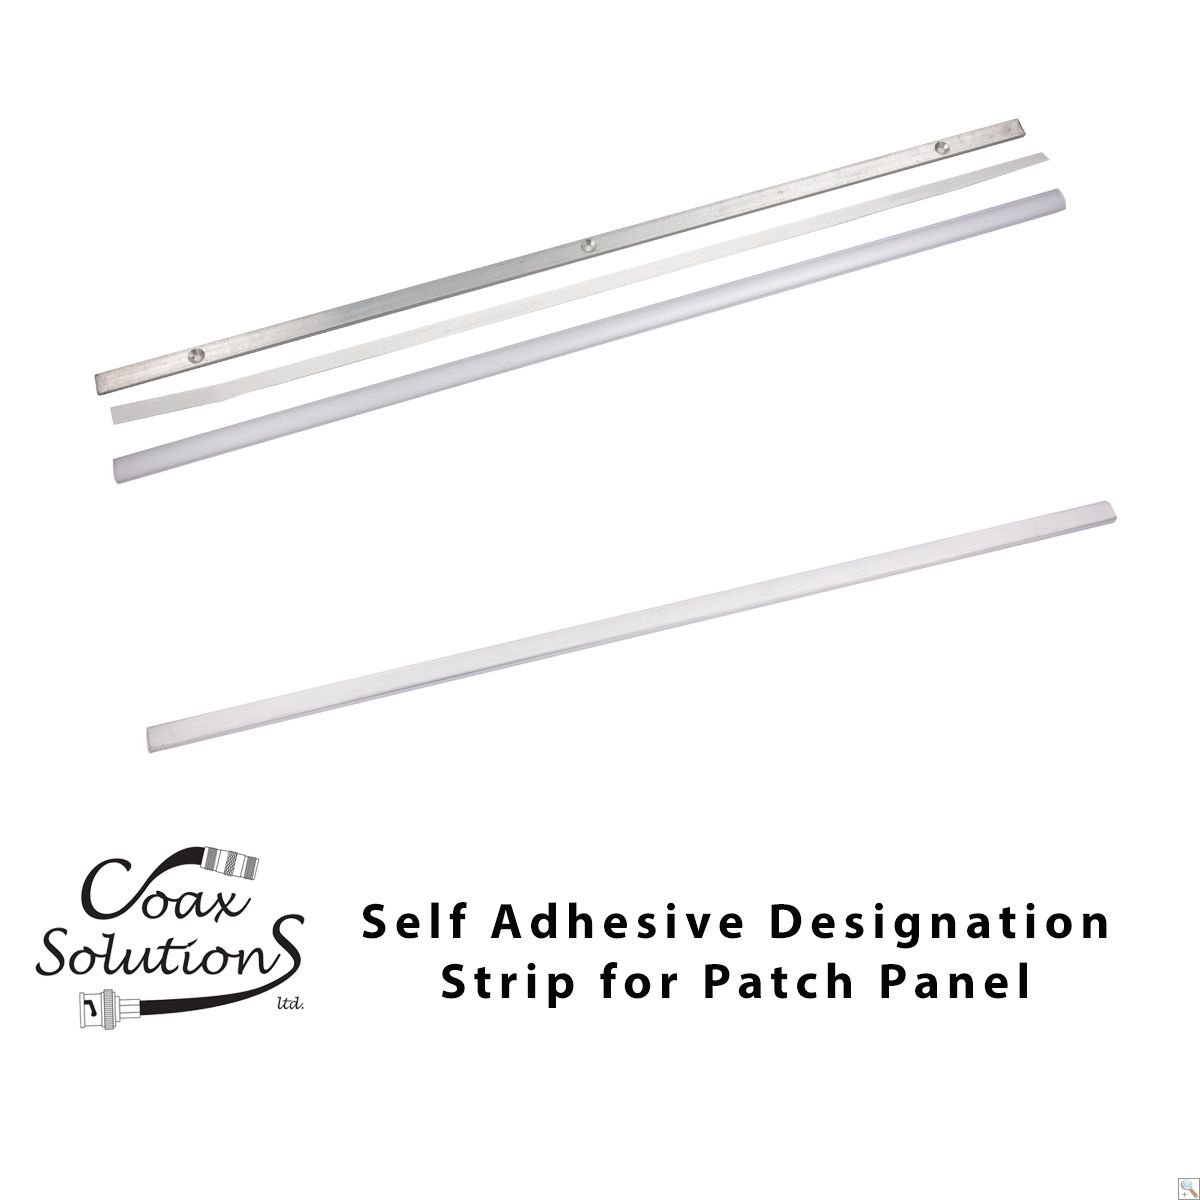 Self Adhesive Designation Strip